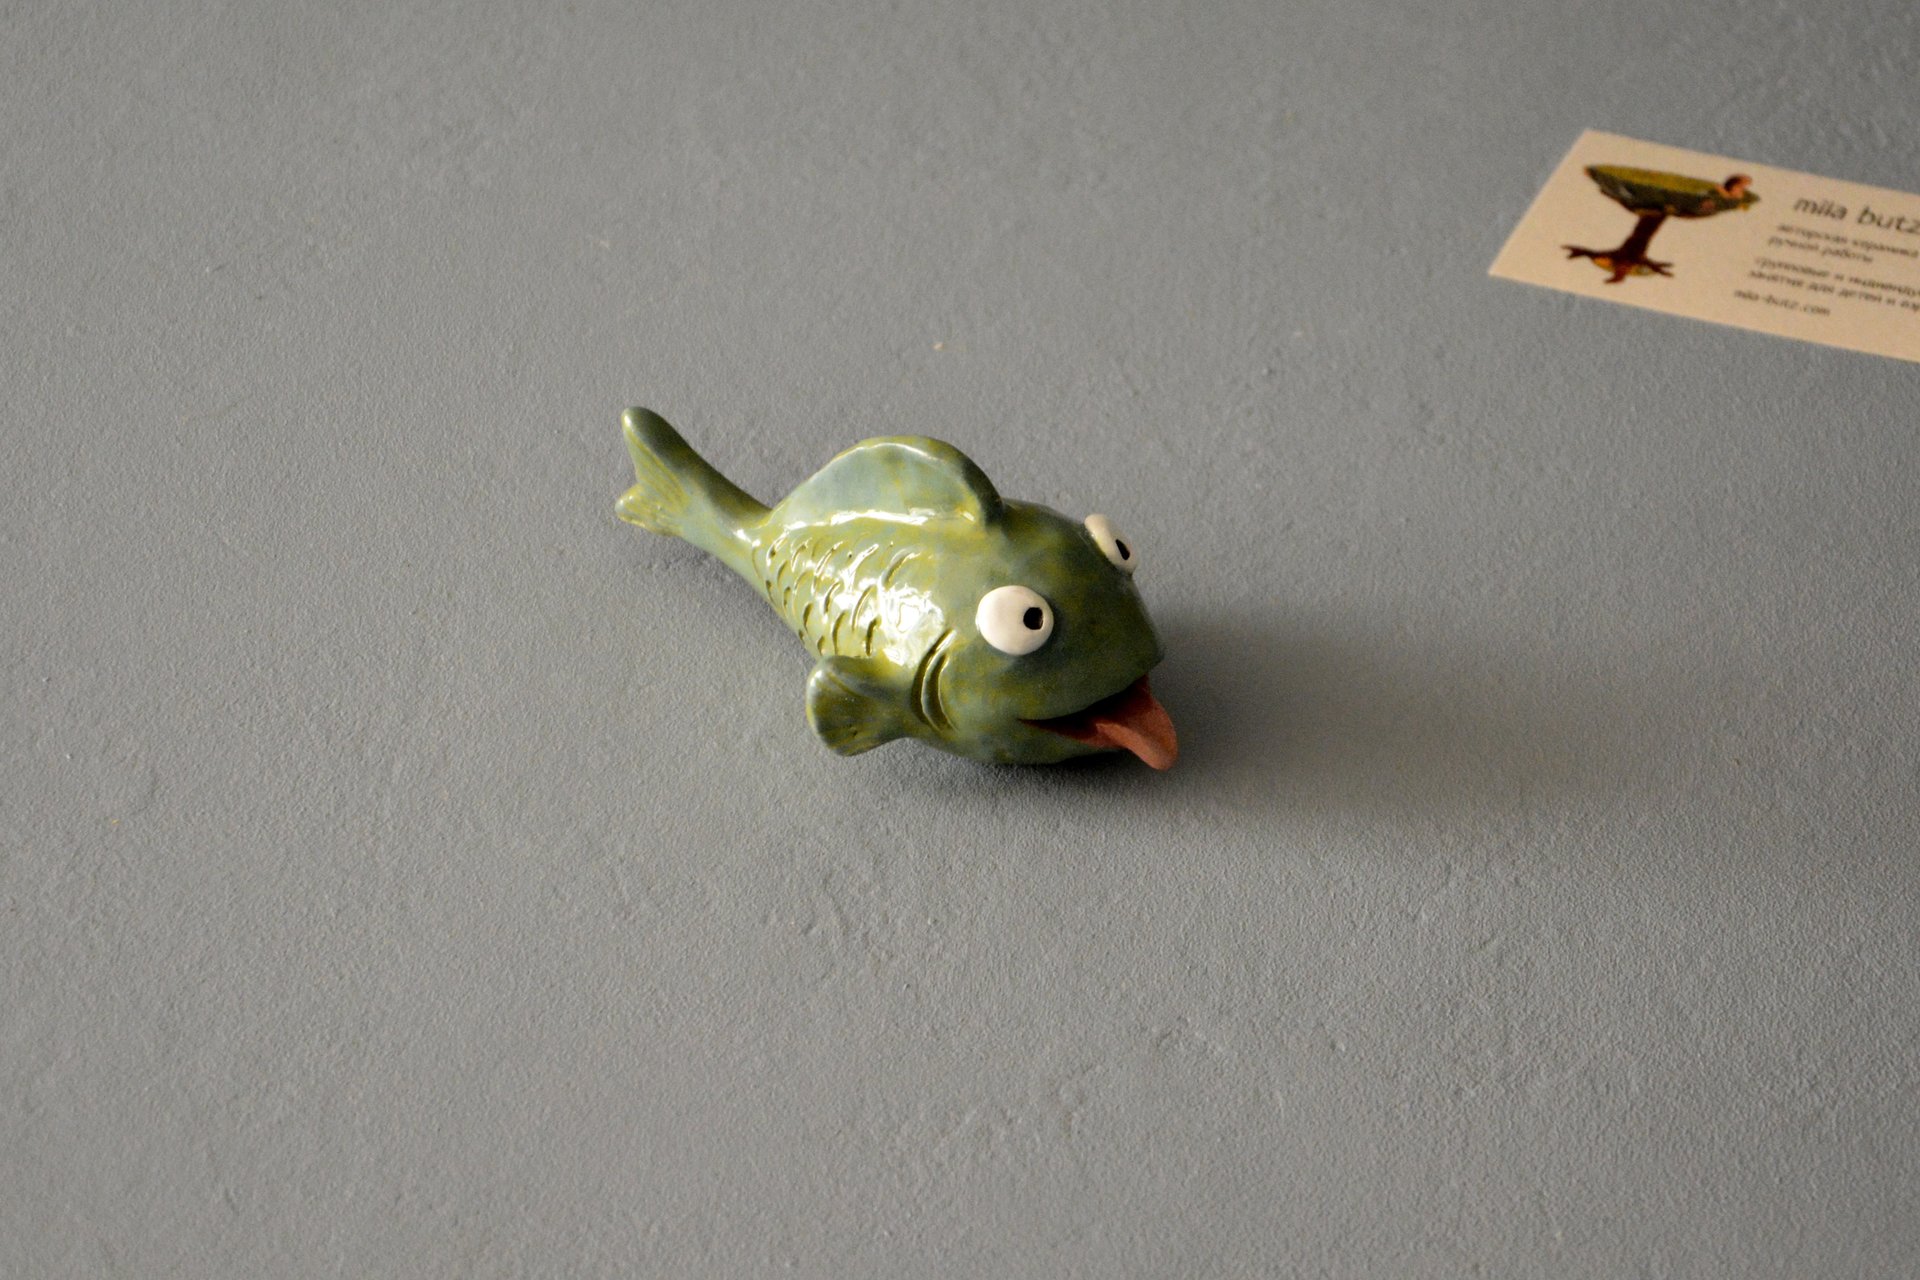 Ceramic fish figurine smiling, length - 12.5 cm, height - 6 cm, photo 1 of 6.